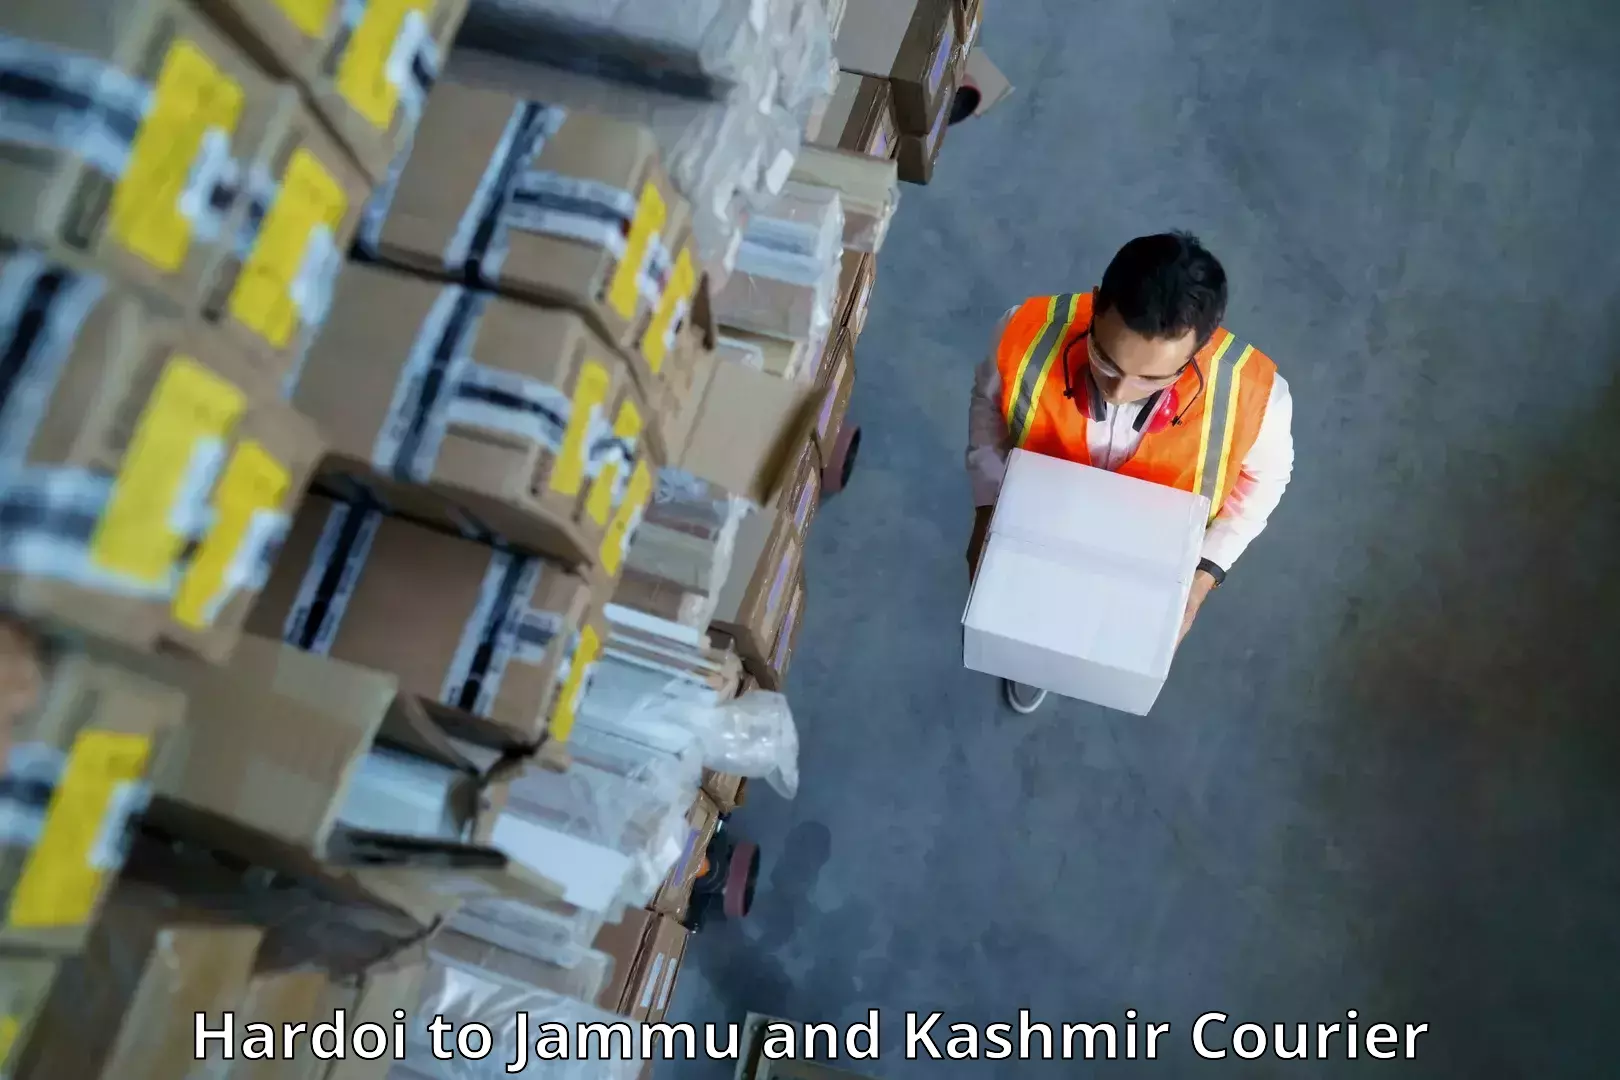 Express delivery capabilities Hardoi to University of Jammu